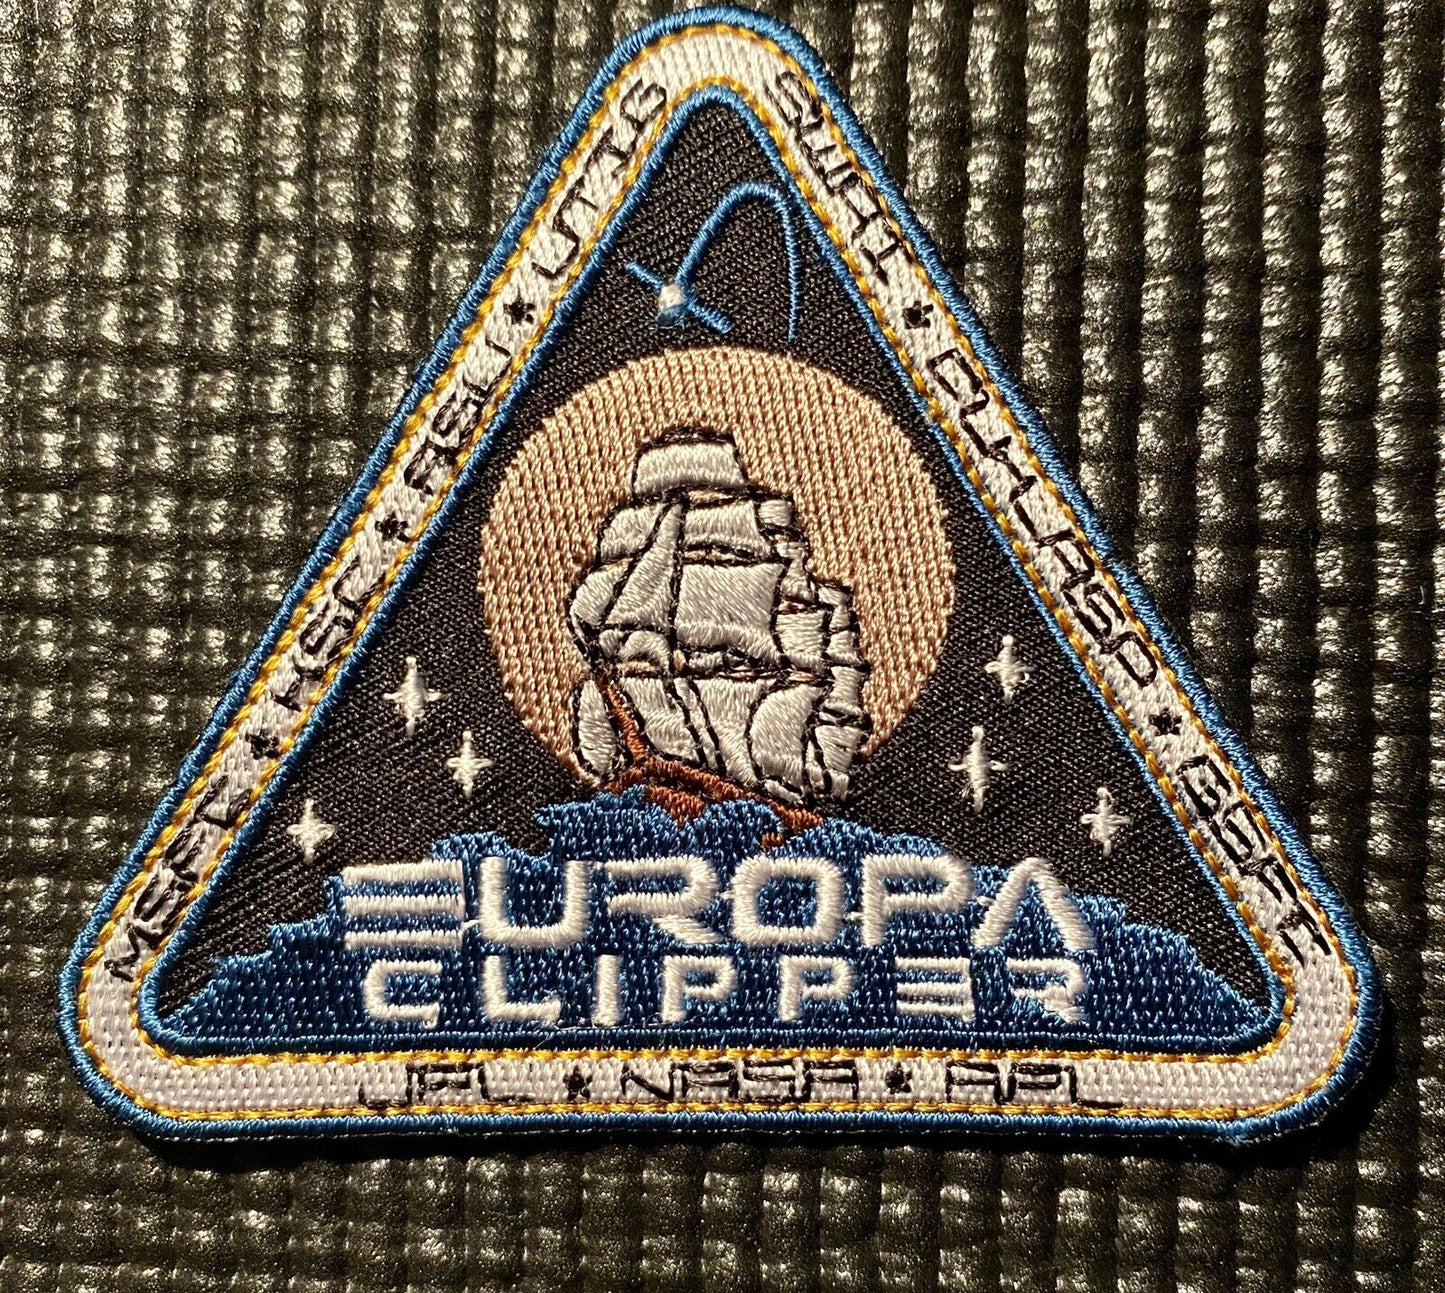 JPL NASA EUROPA CLIPPER MISSION PATCH- 3.5" Diameter